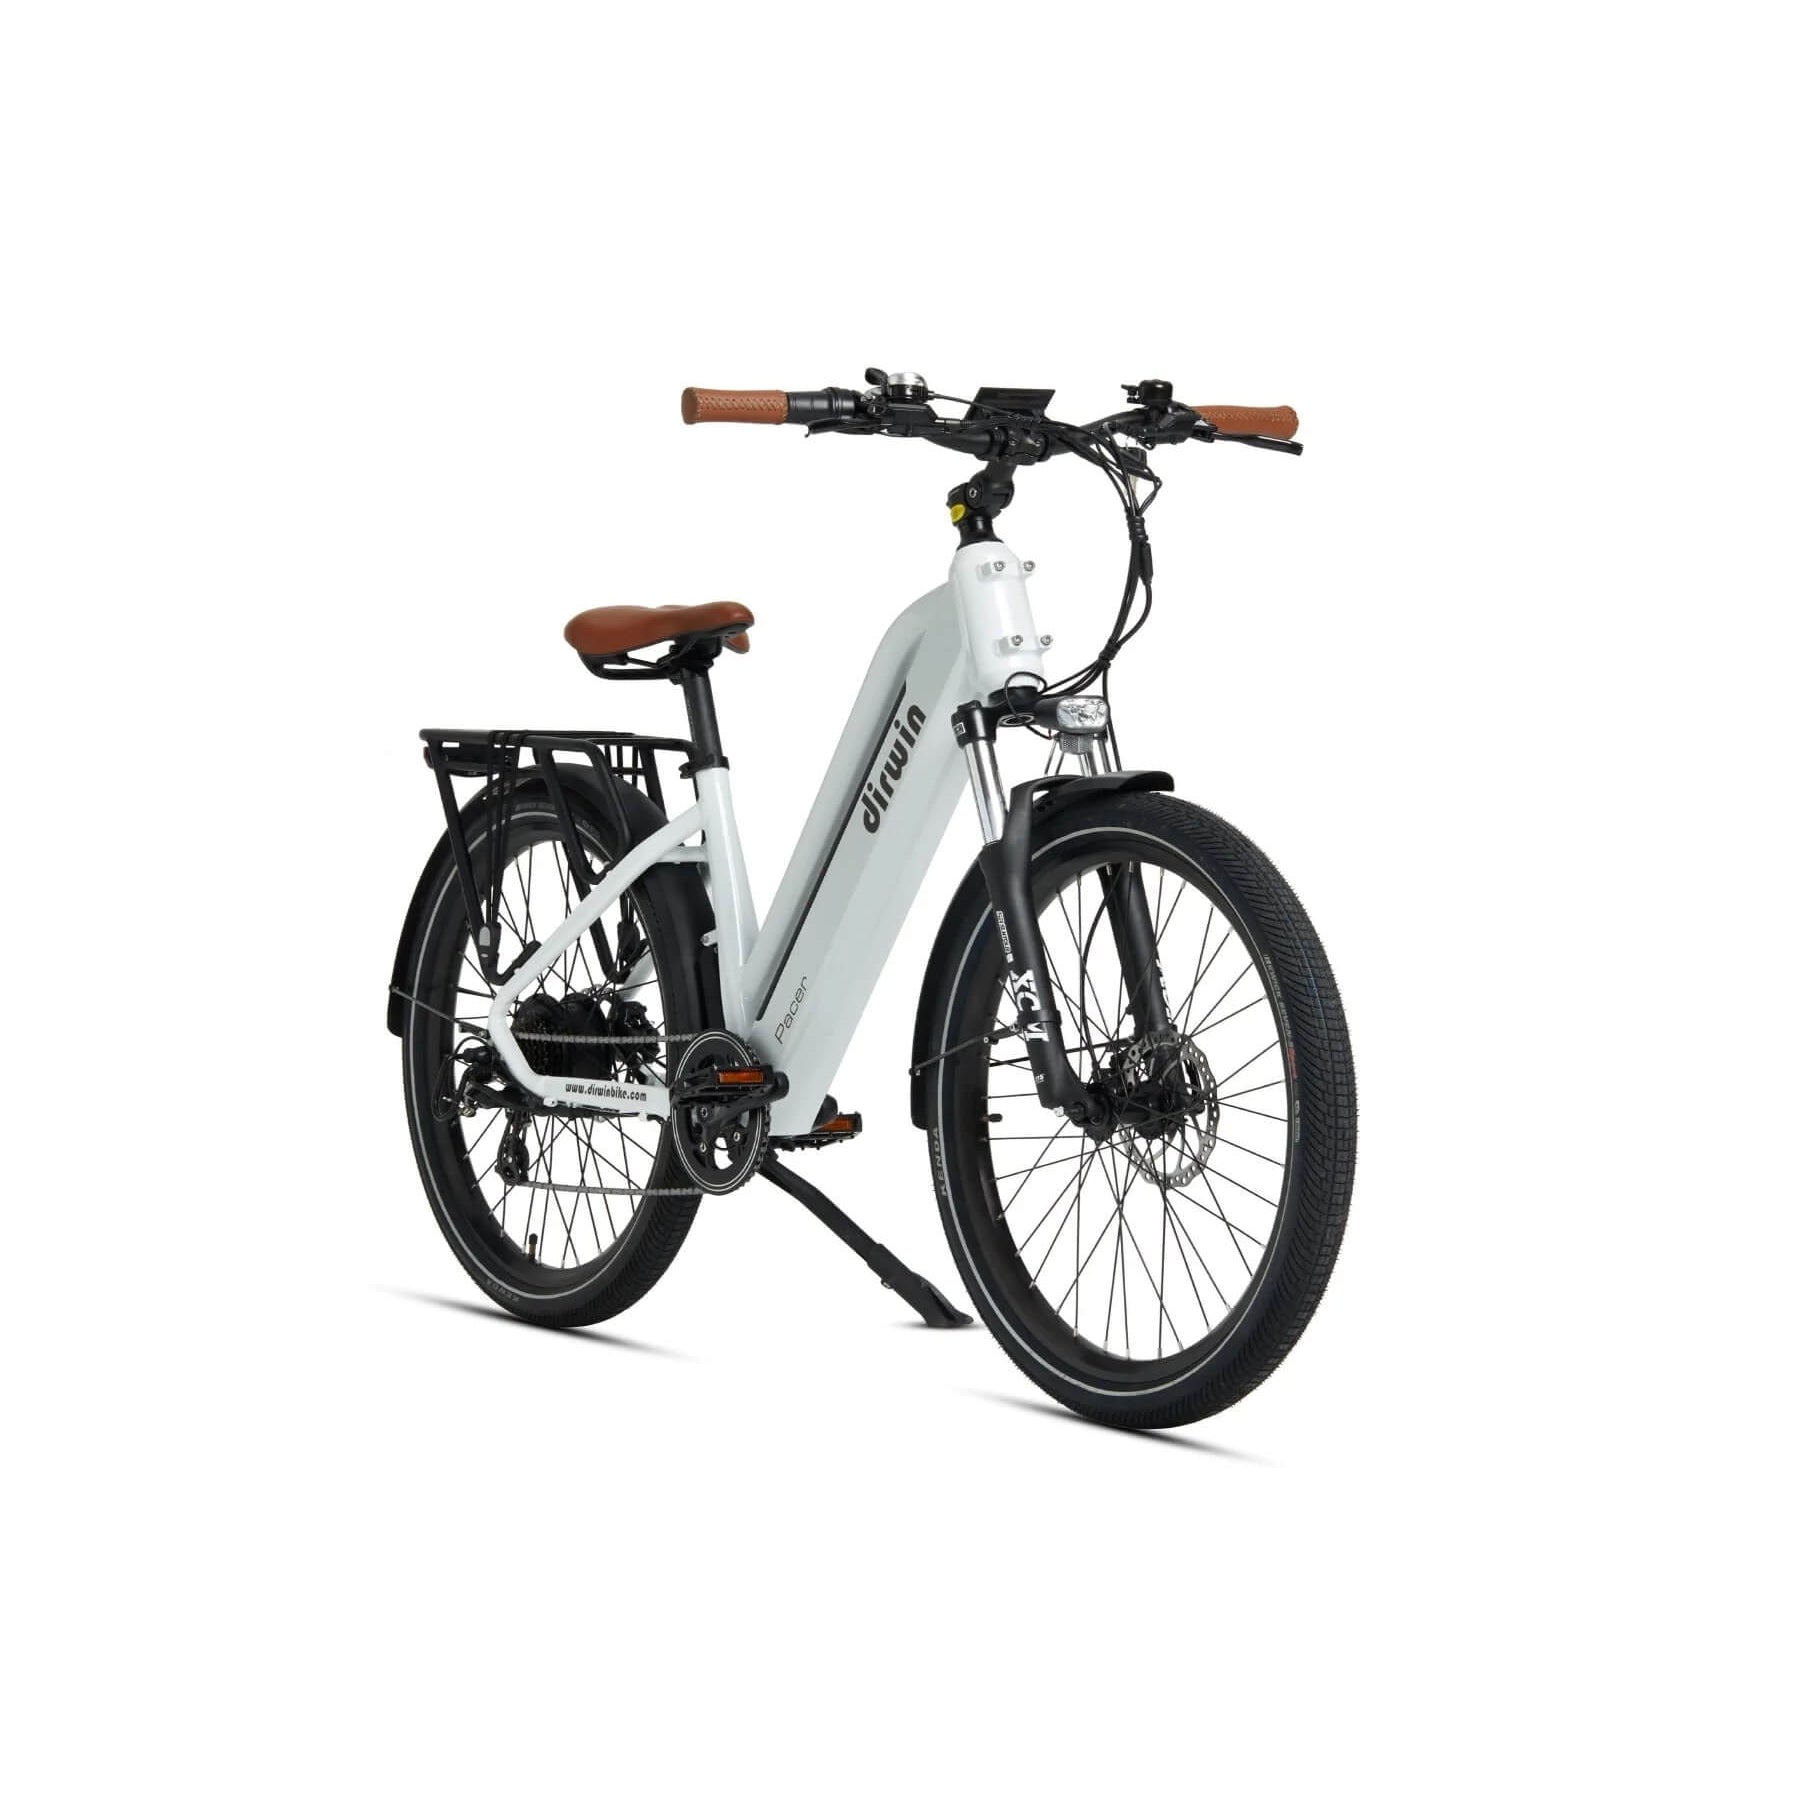 Dirwin-Pacer-500W-Commuter-Electric-Bike-Commuter-Dirwin-Bike-Gray